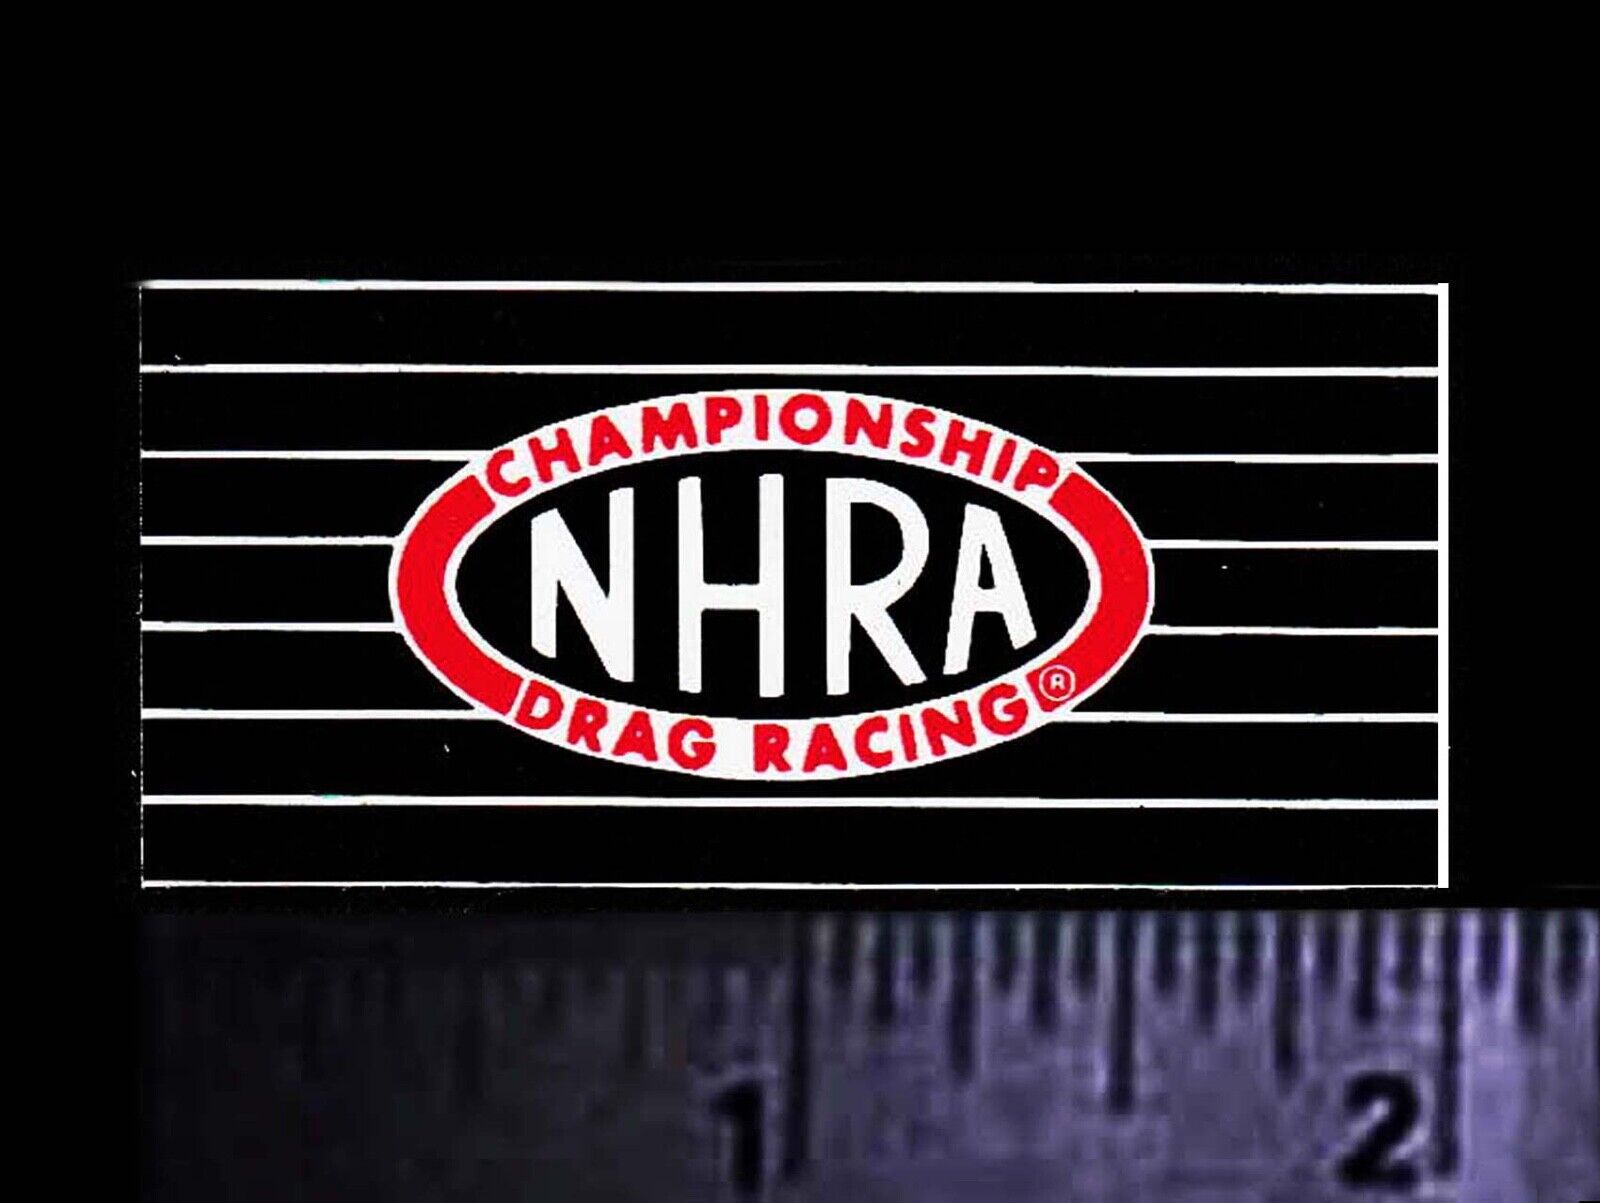 NHRA National Hot Rod Association - Original Vintage Racing Decal/Sticker 2”